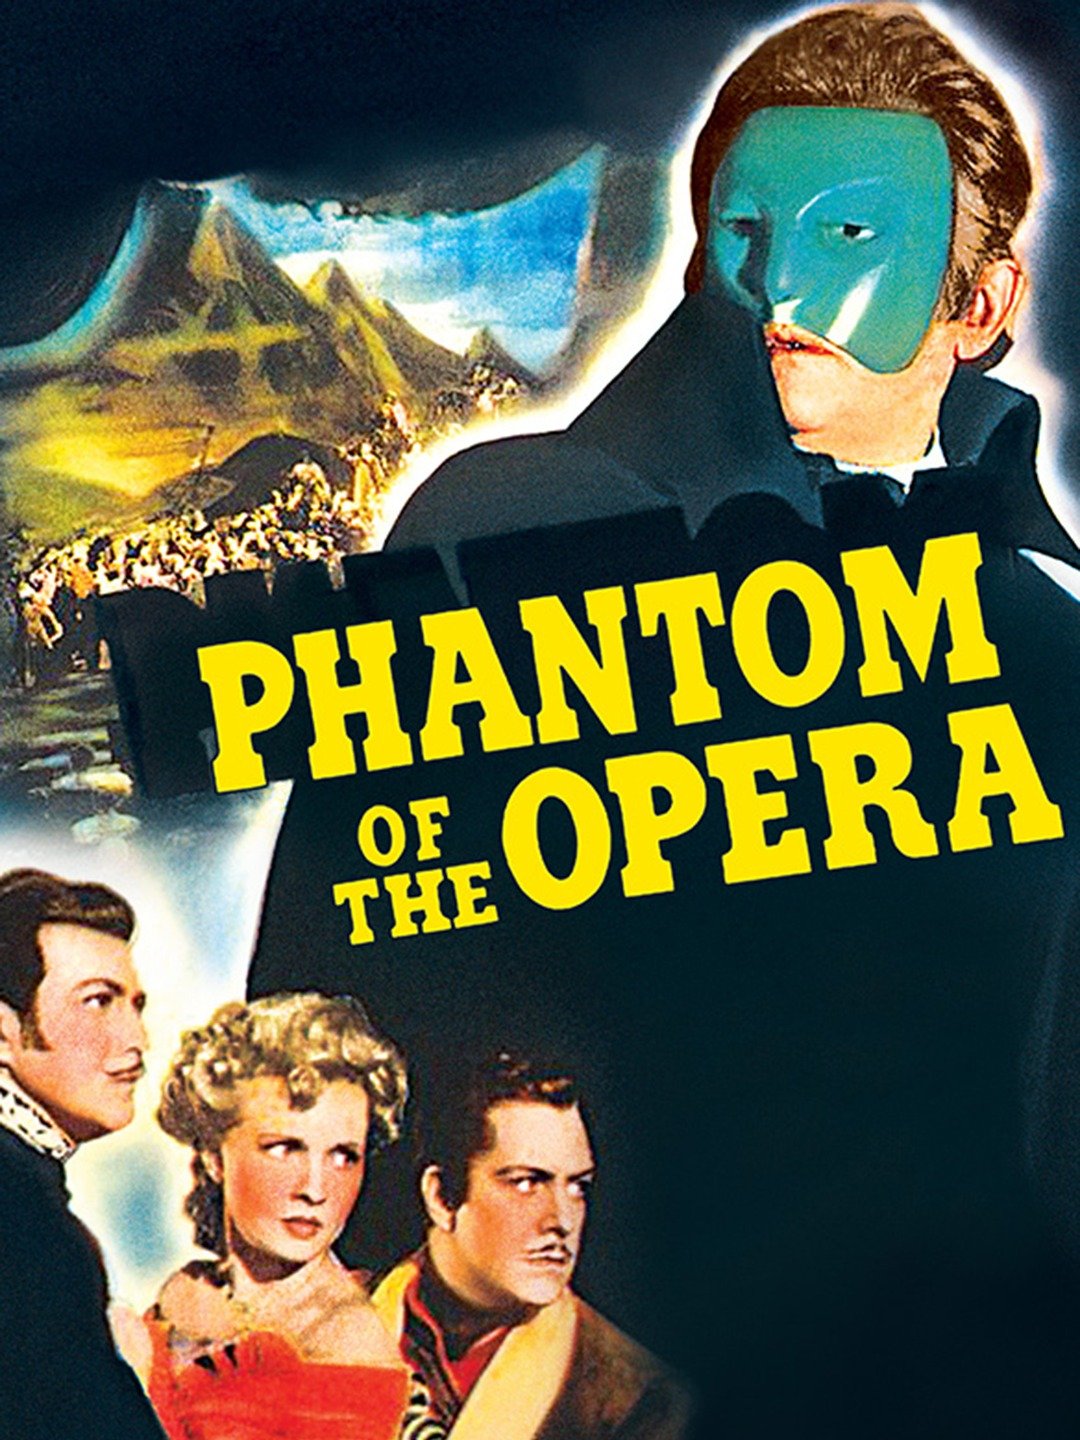 The Phantom of the Opera photo